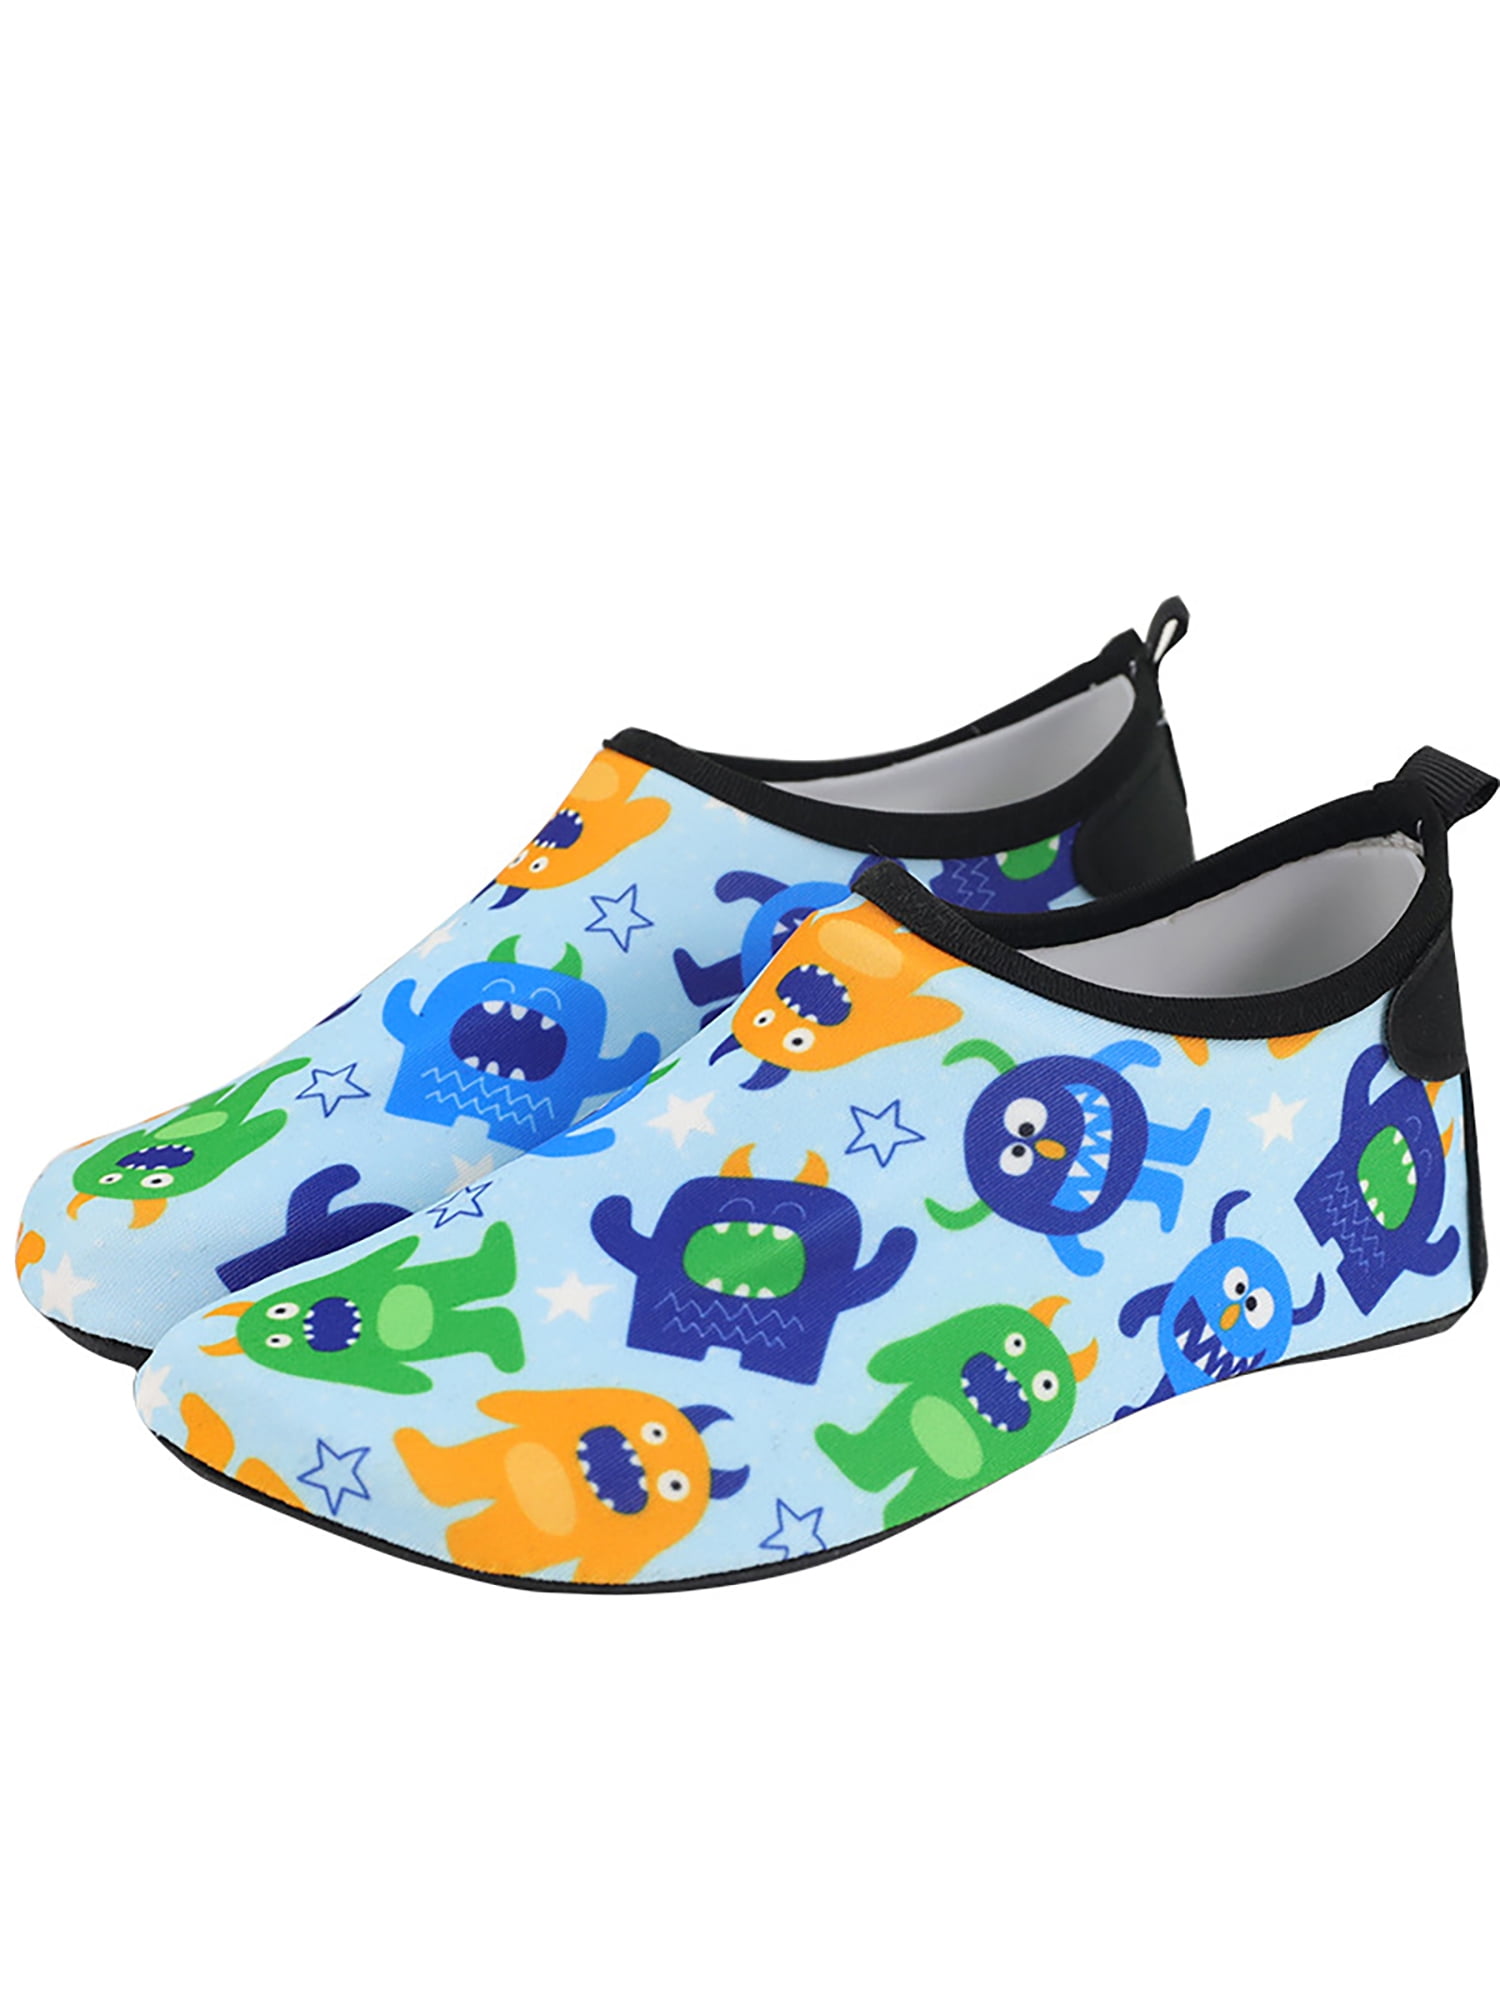 Baby Kid Summer Beach Surfing Swim Aqua Socks Water Shoes Scuba Diving Size6 7 8 